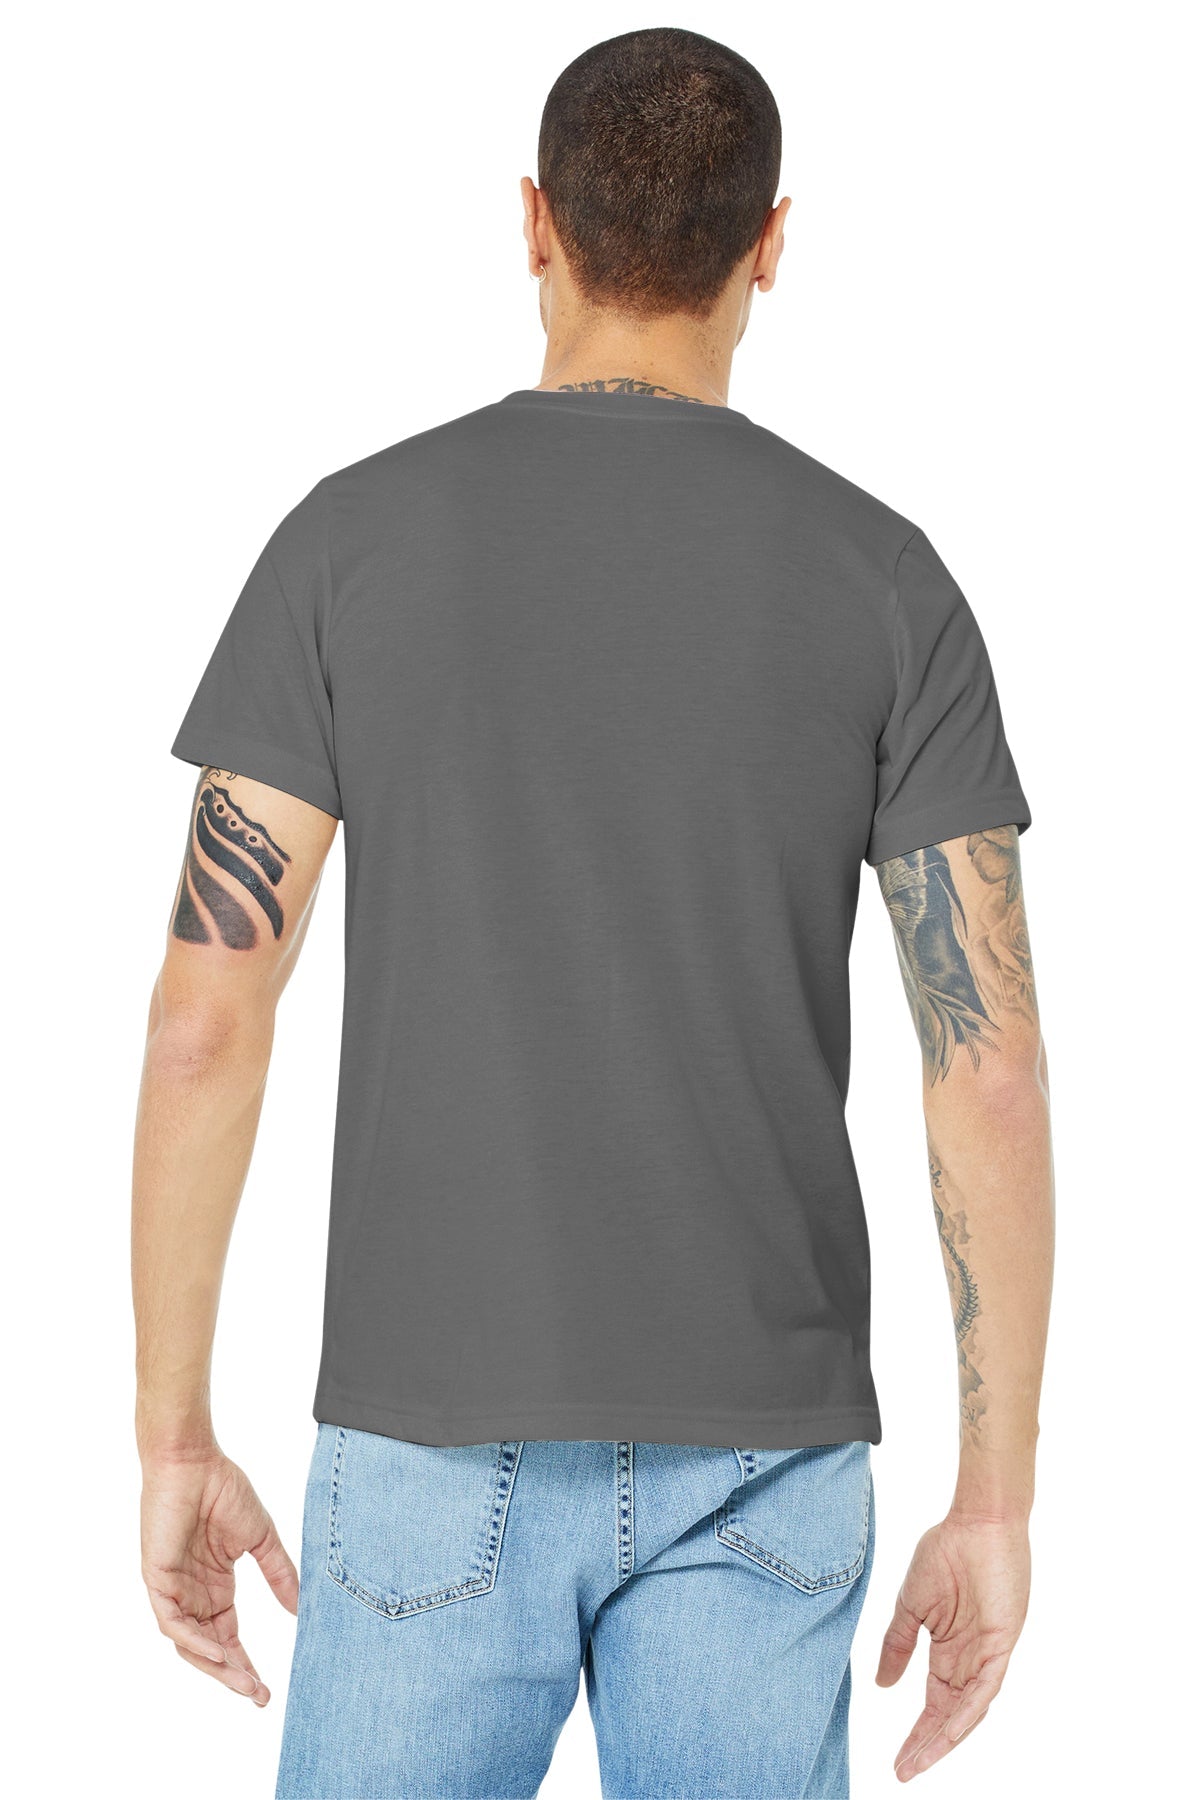 bella + canvas unisex made in the usa jersey short sleeve t-shirt 3001u asphalt